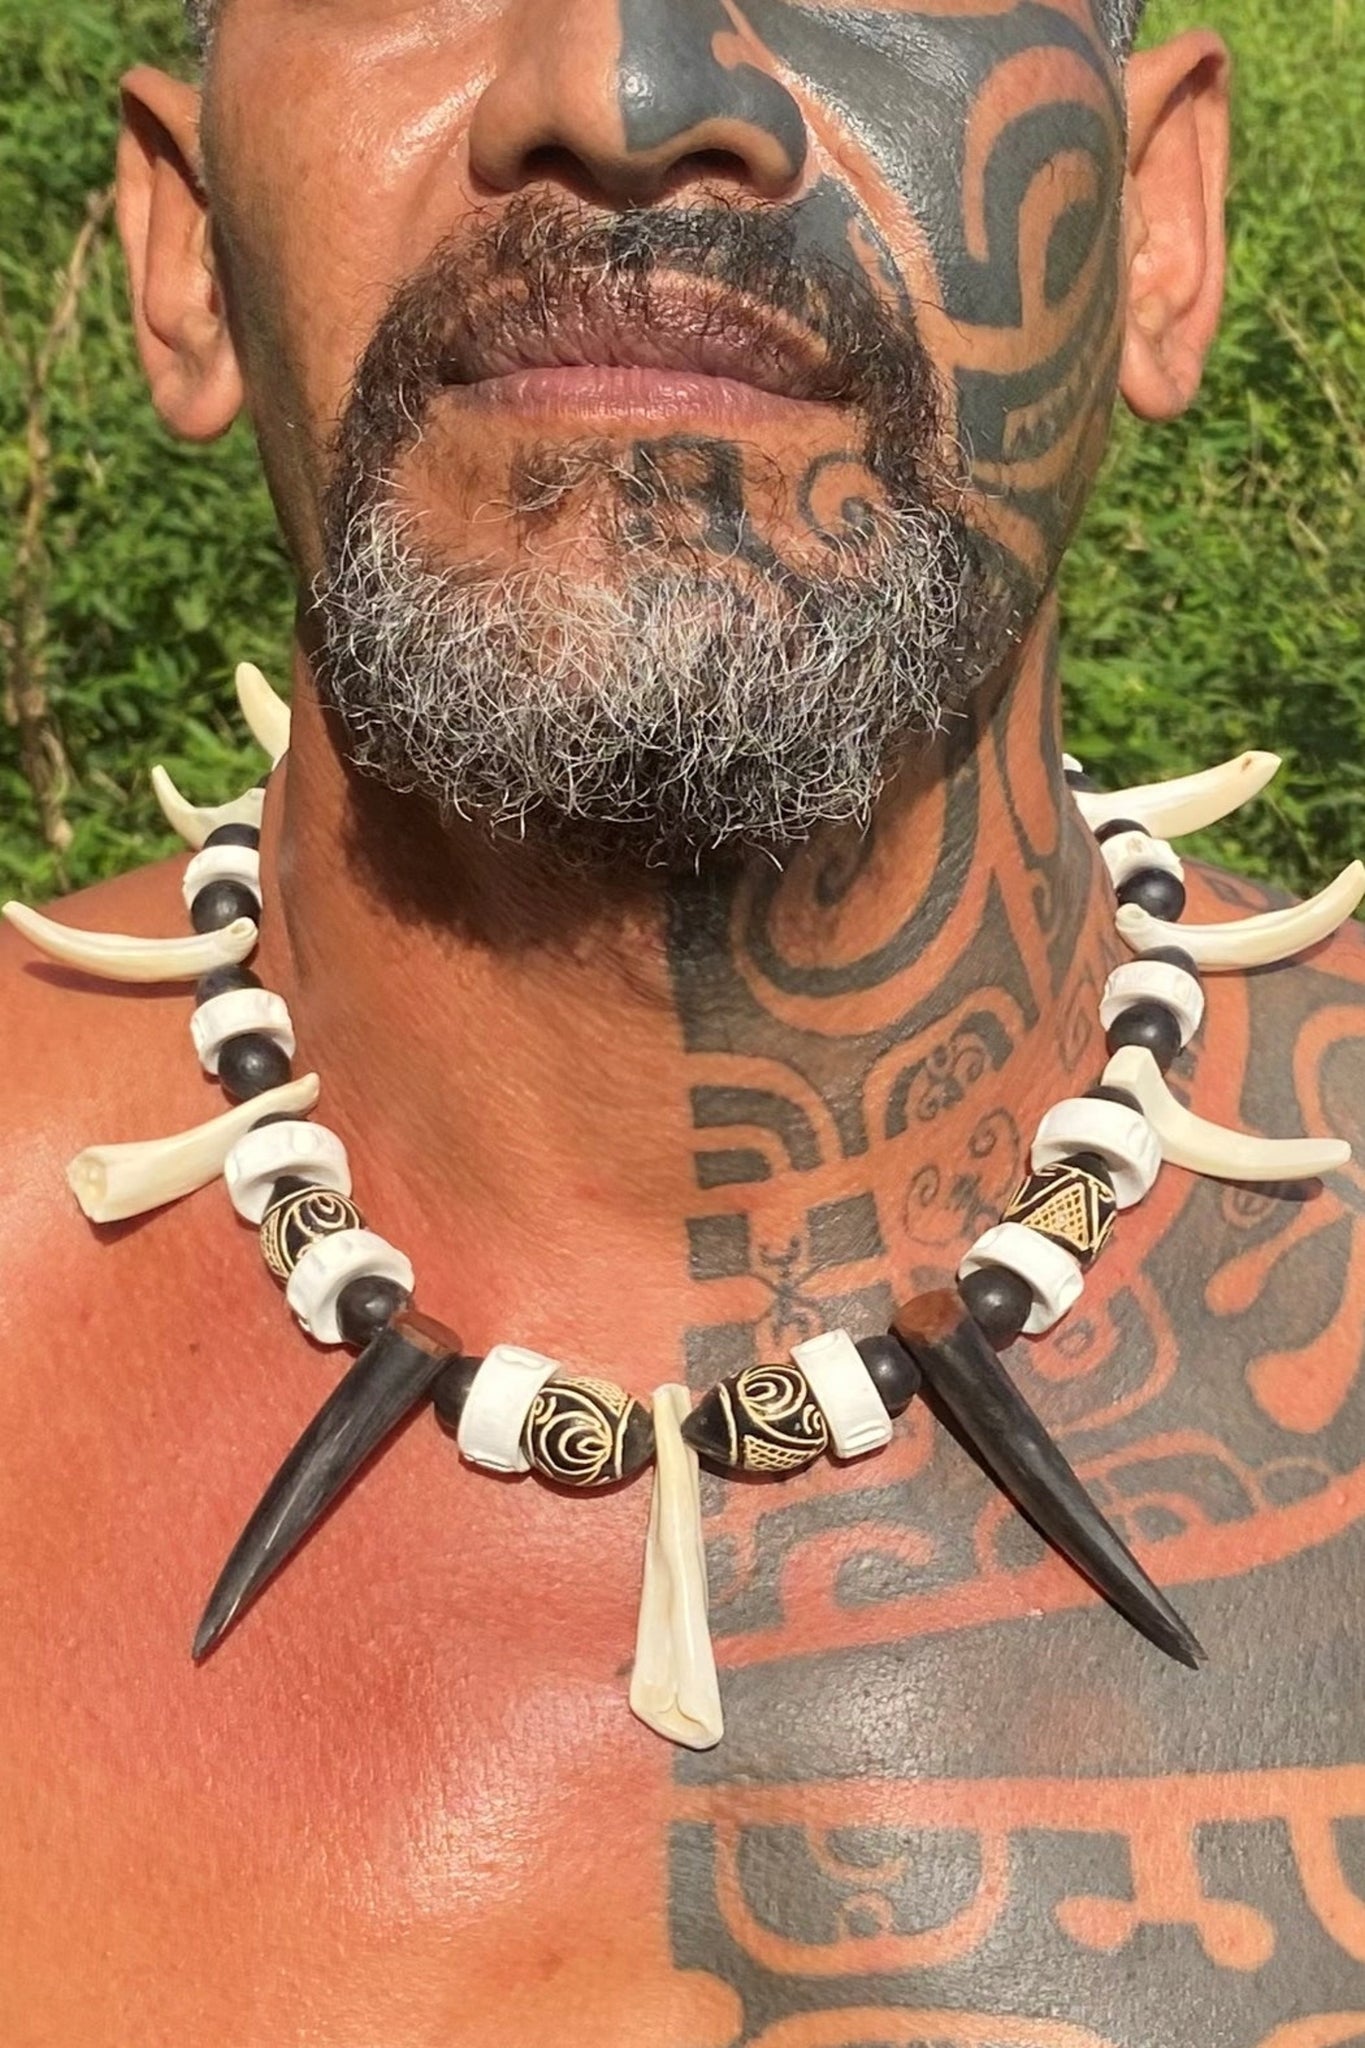 Marquesan necklace